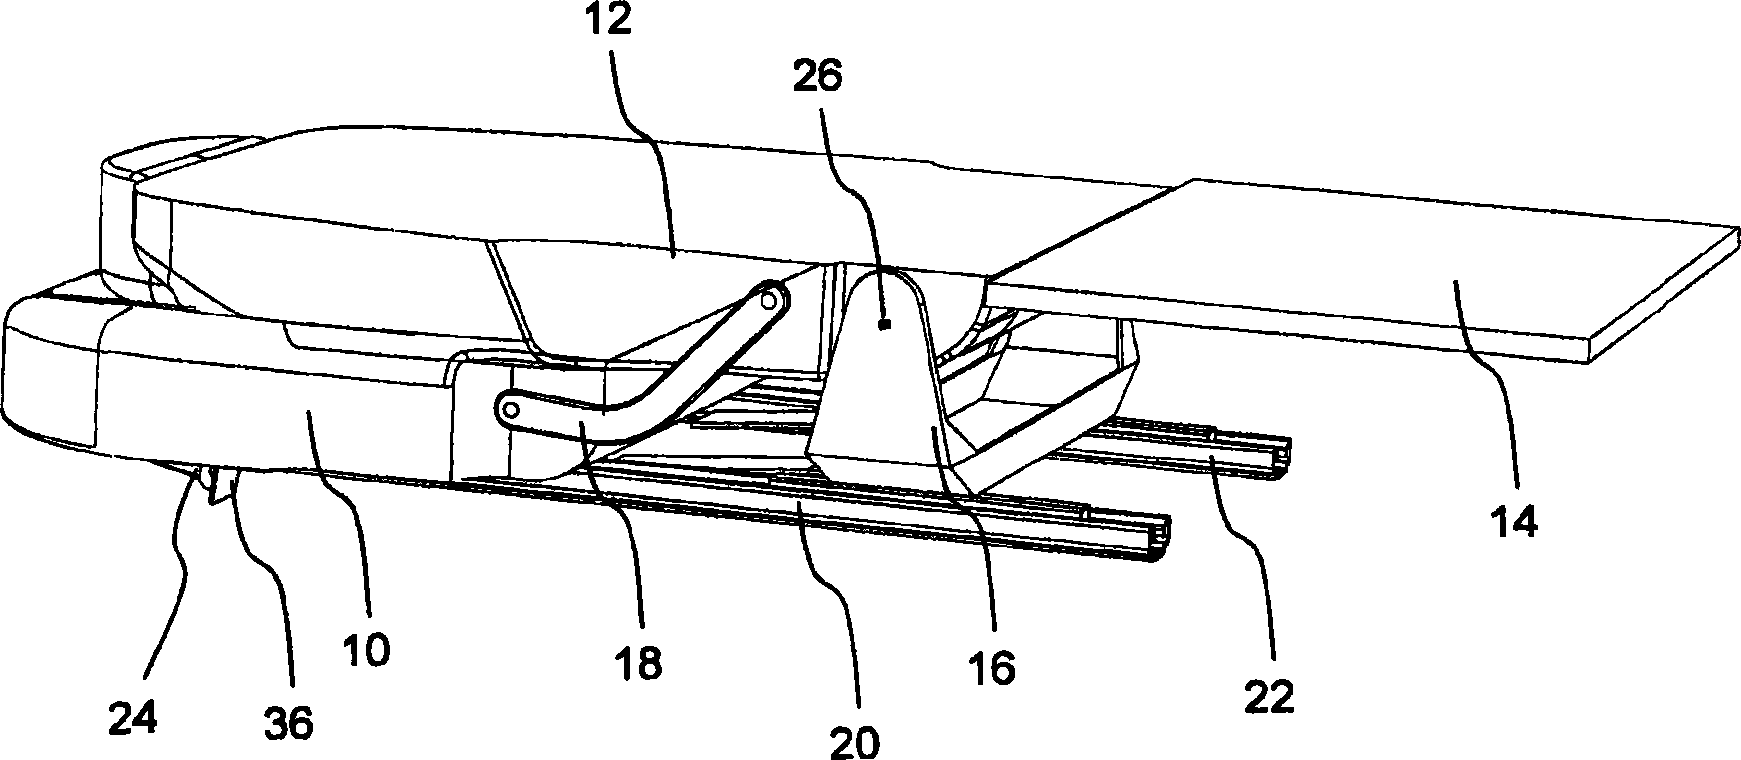 Fold-down vehicle seat